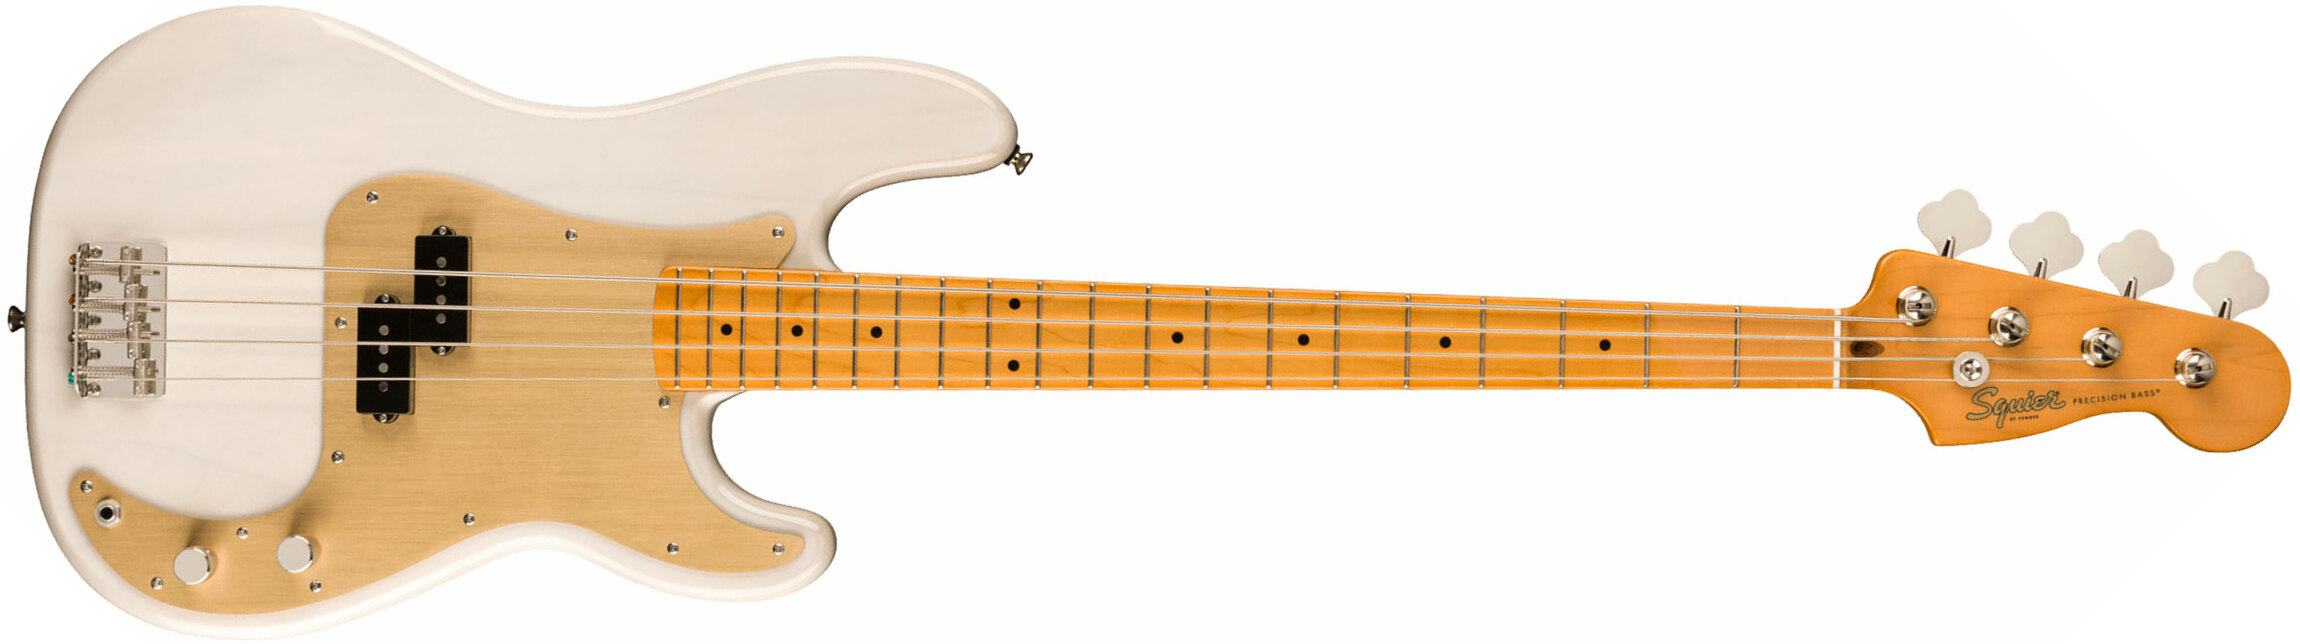 Squier Precision Bass Late '50s Classic Vibe Fsr Ltd Mn - White Blonde - Bajo eléctrico de cuerpo sólido - Main picture